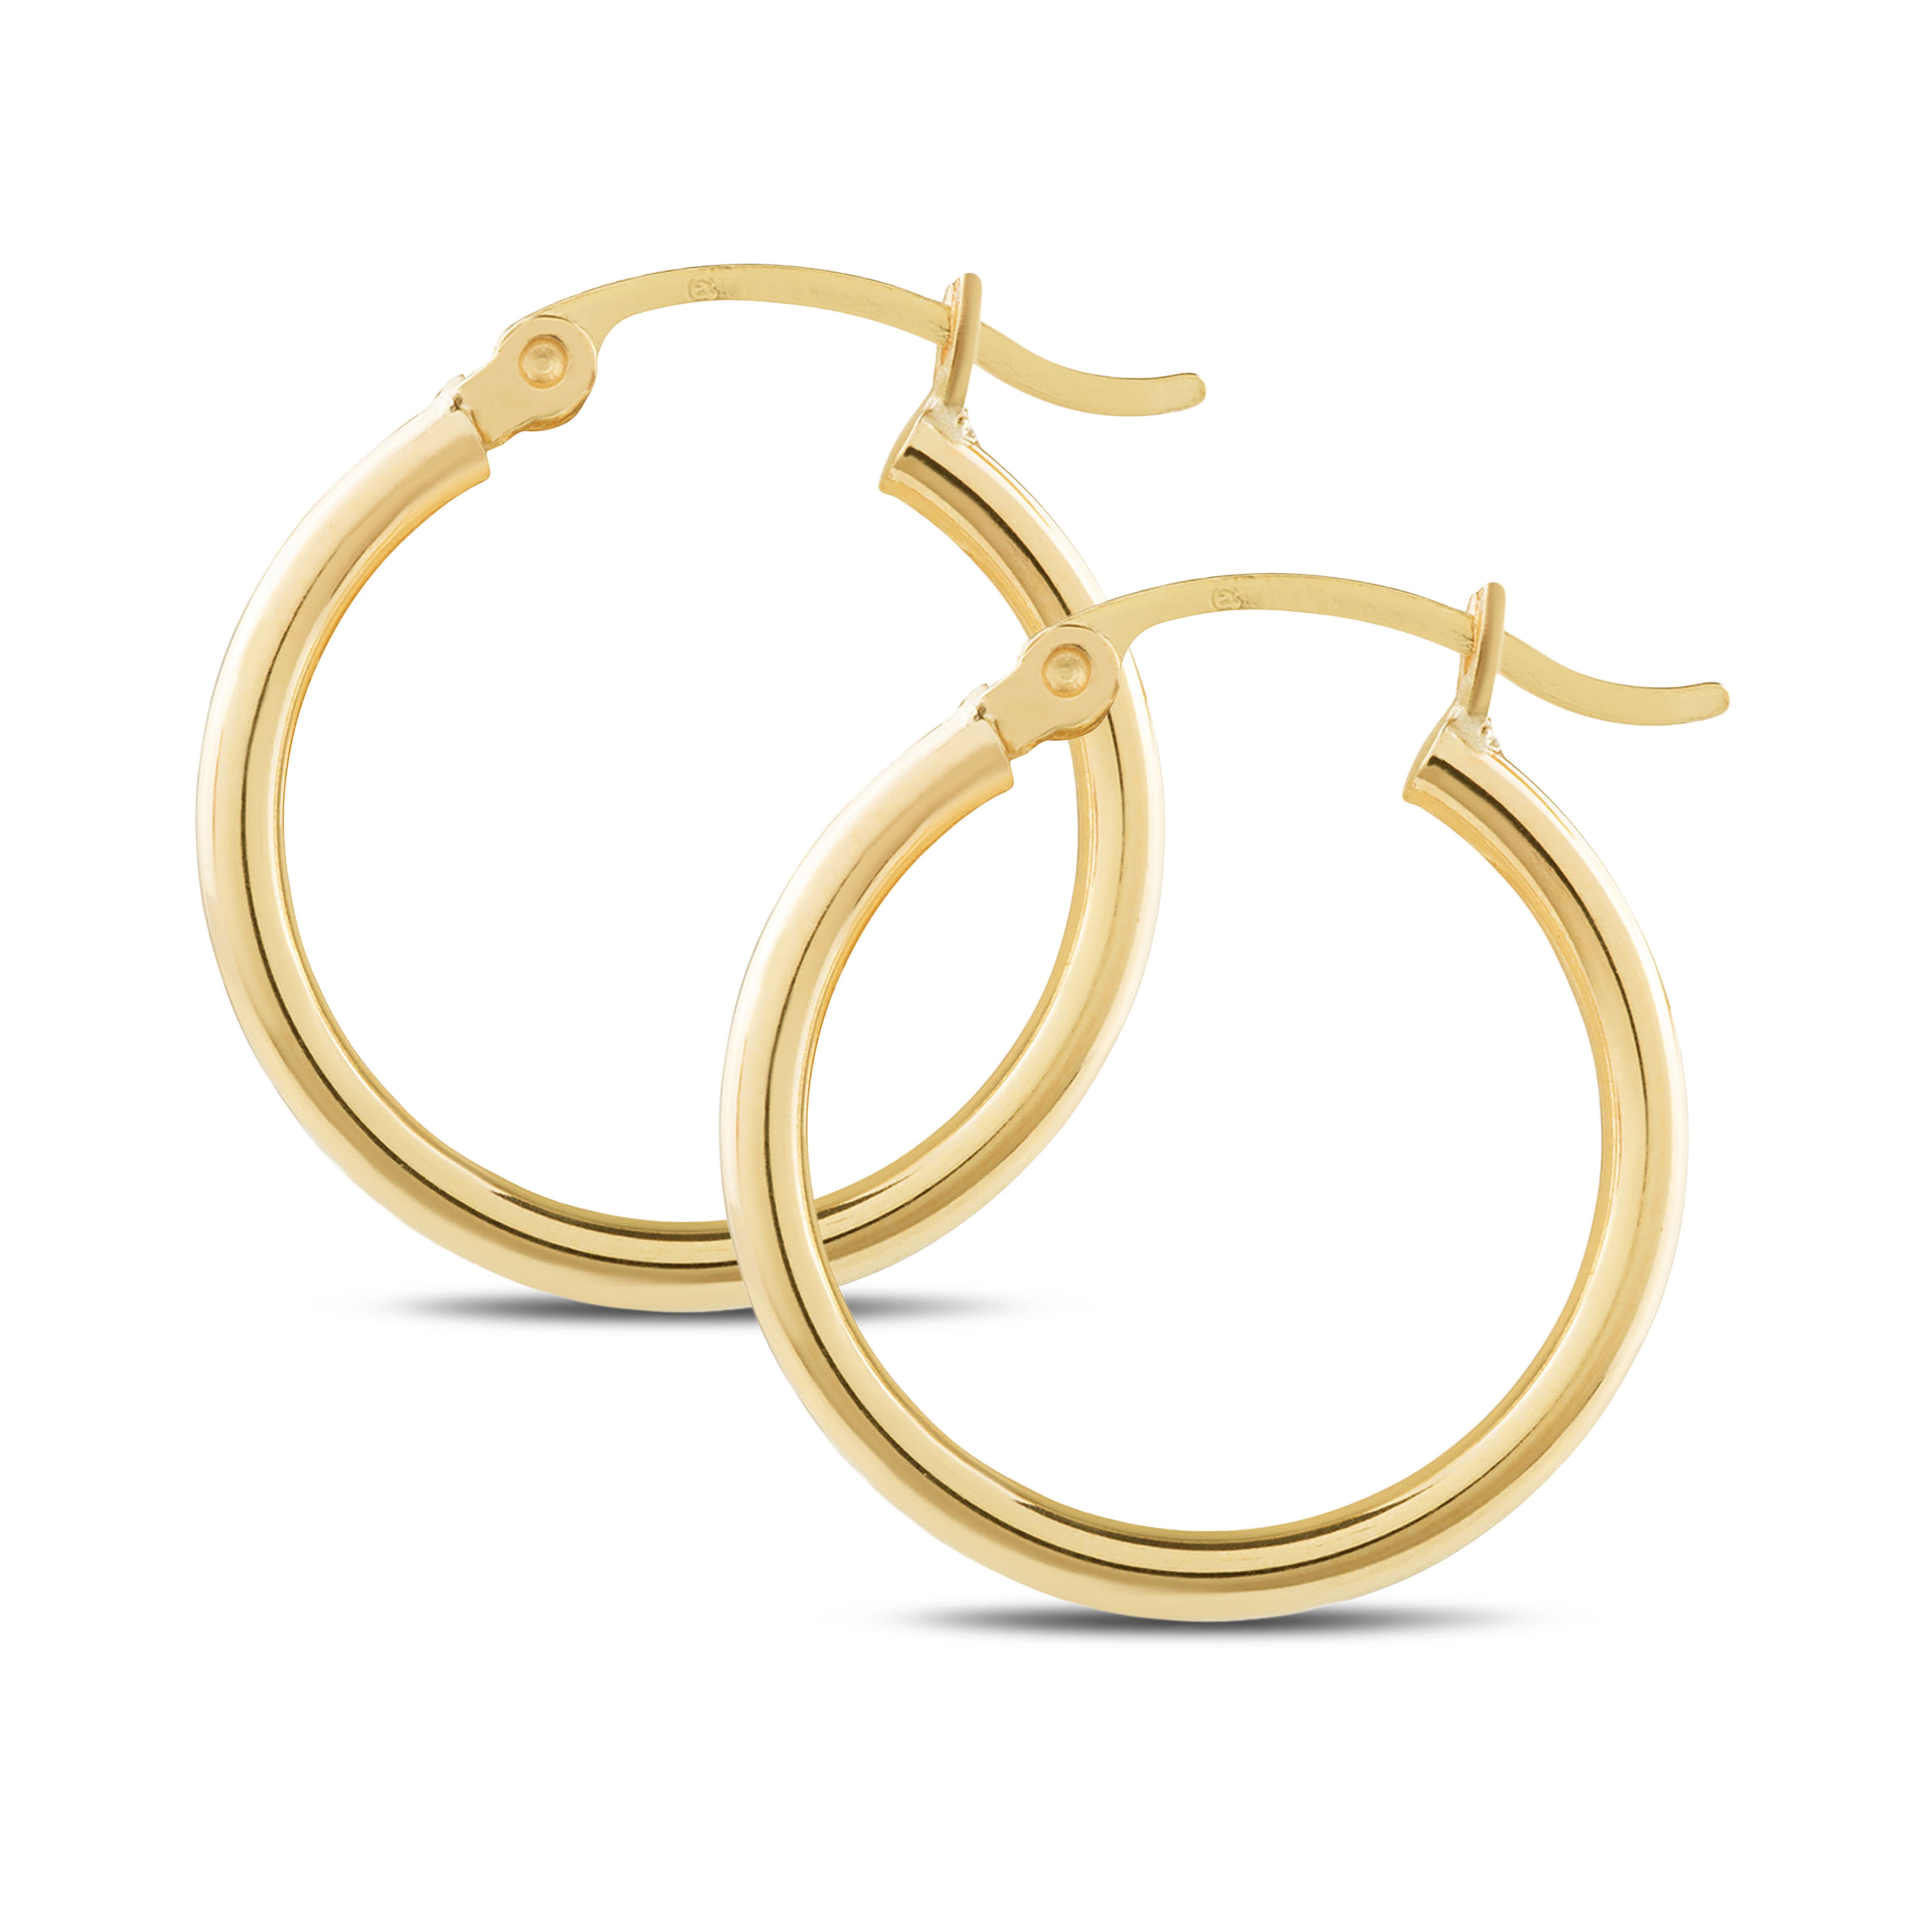 Goldia 14K Yellow Gold Polished Hinged Hoop Earrings